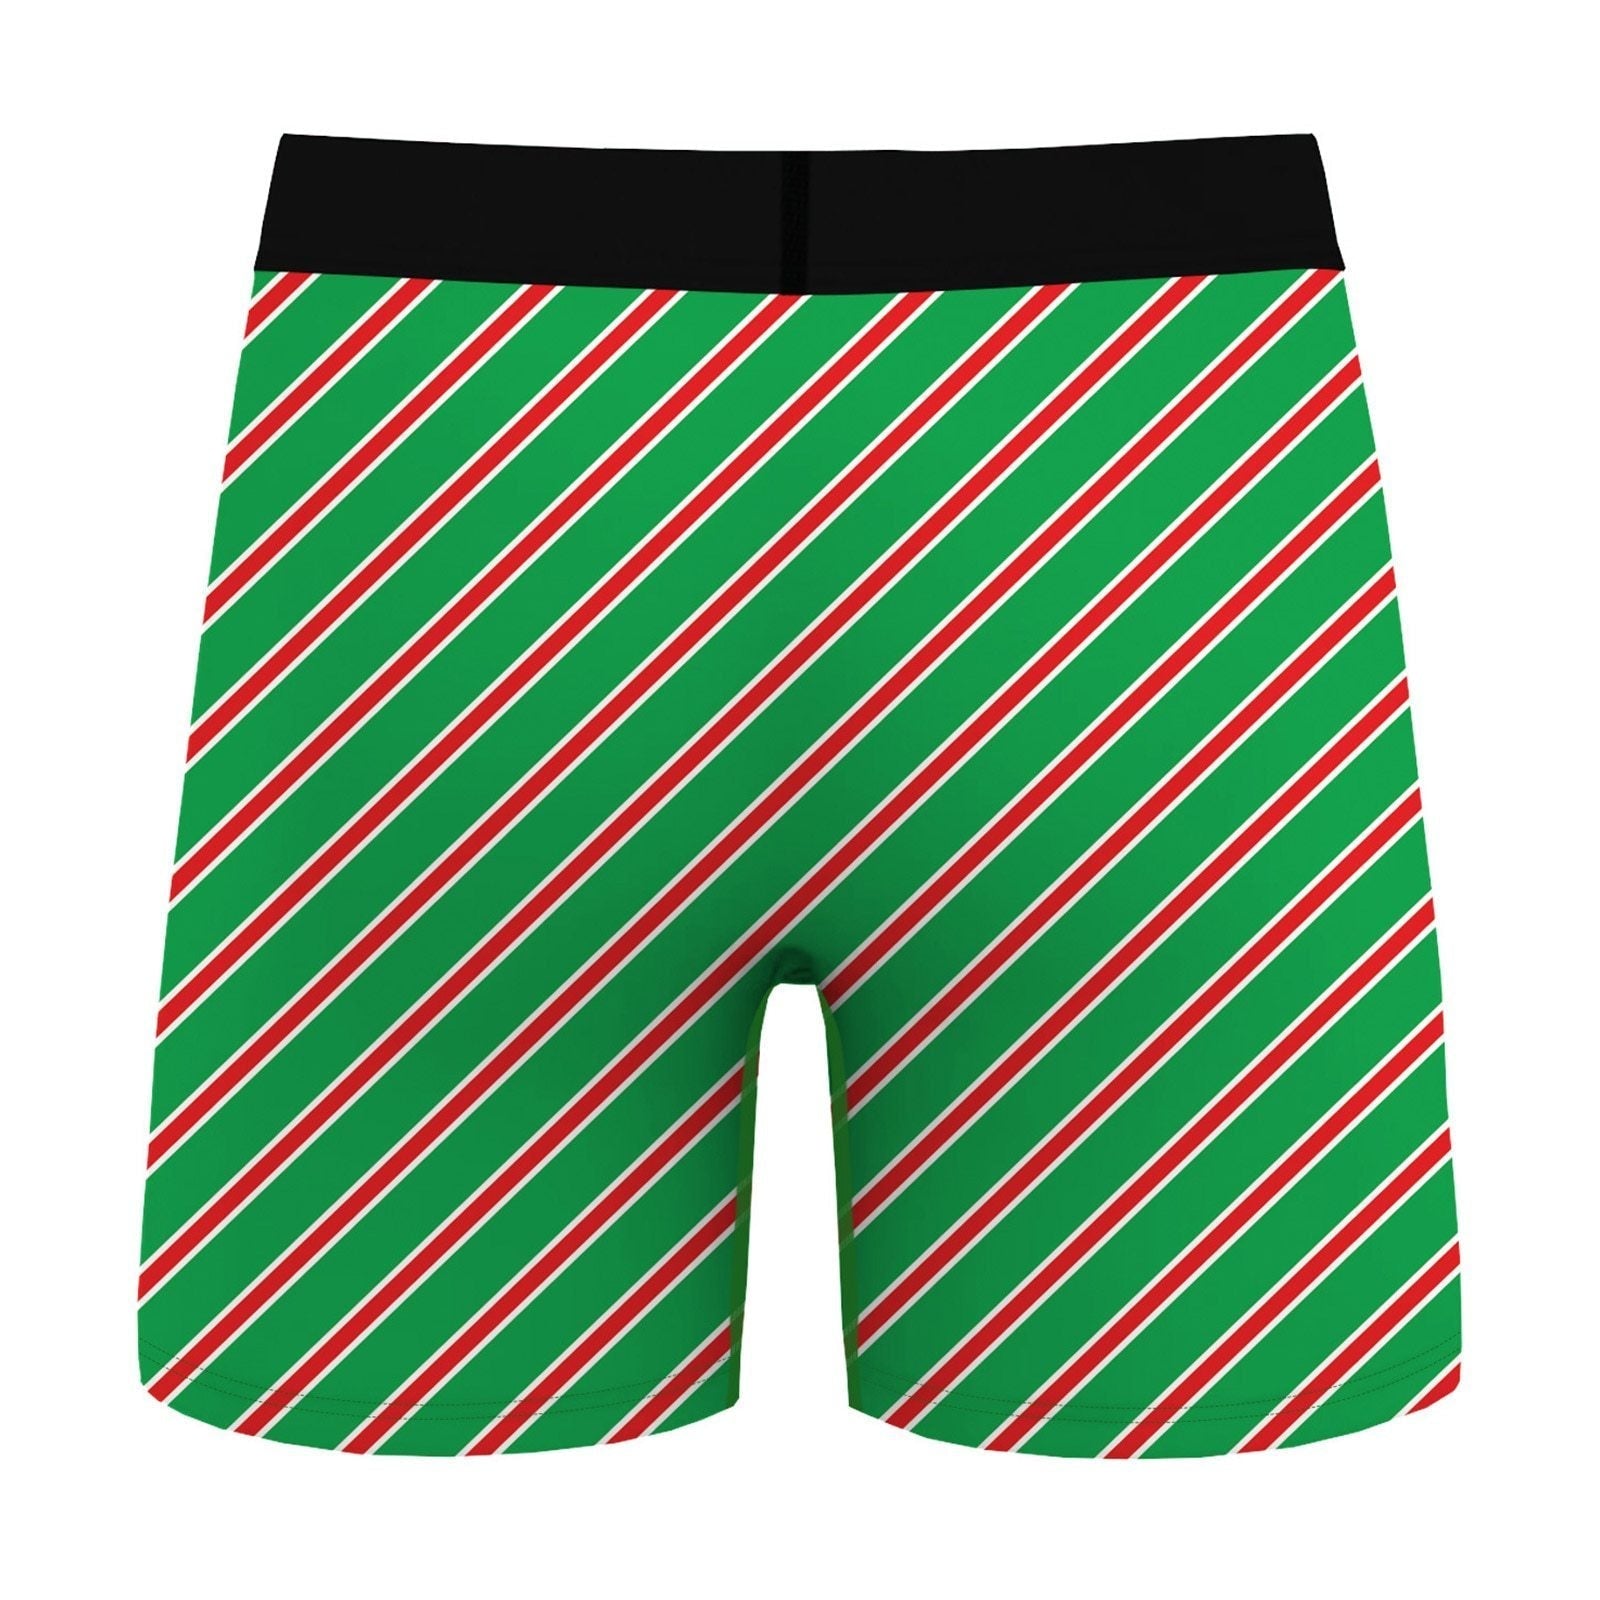 SALE - XMAS GIFT - Mens Christmas Diamond Printed Boxer Shorts with De